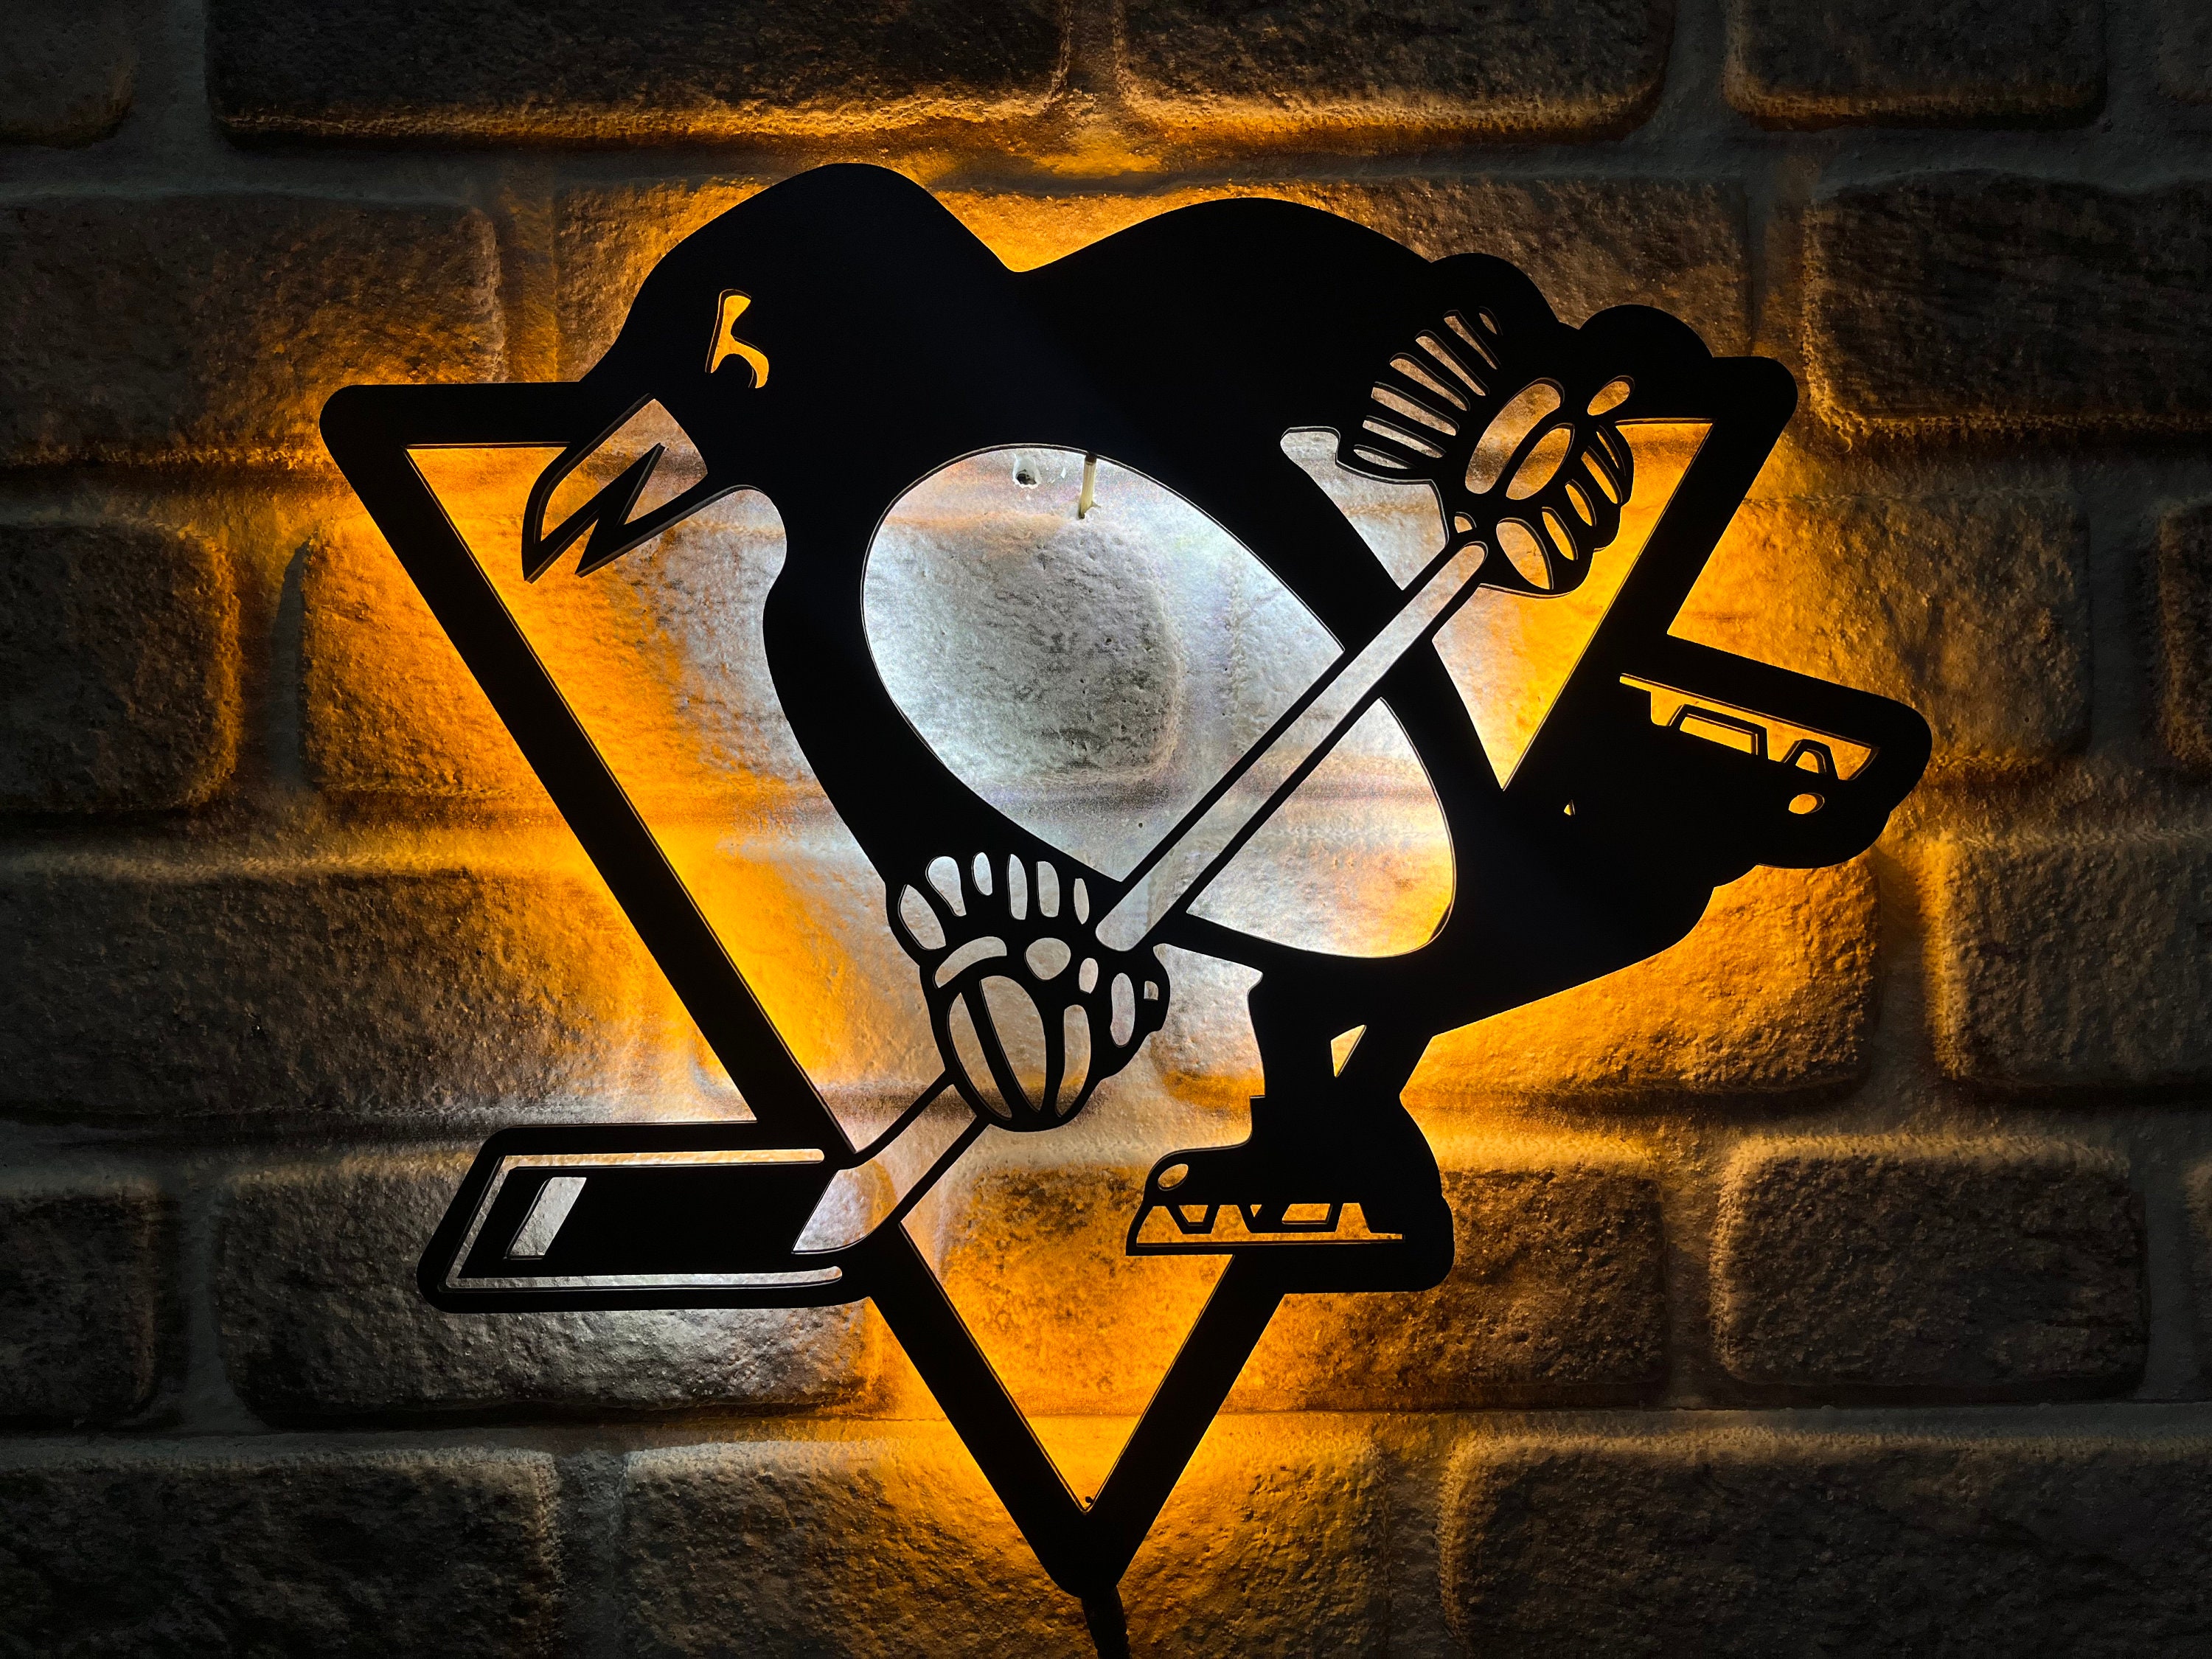 Grateful Dead Pittsburgh Penguins Lightning 3D Hockey Jersey